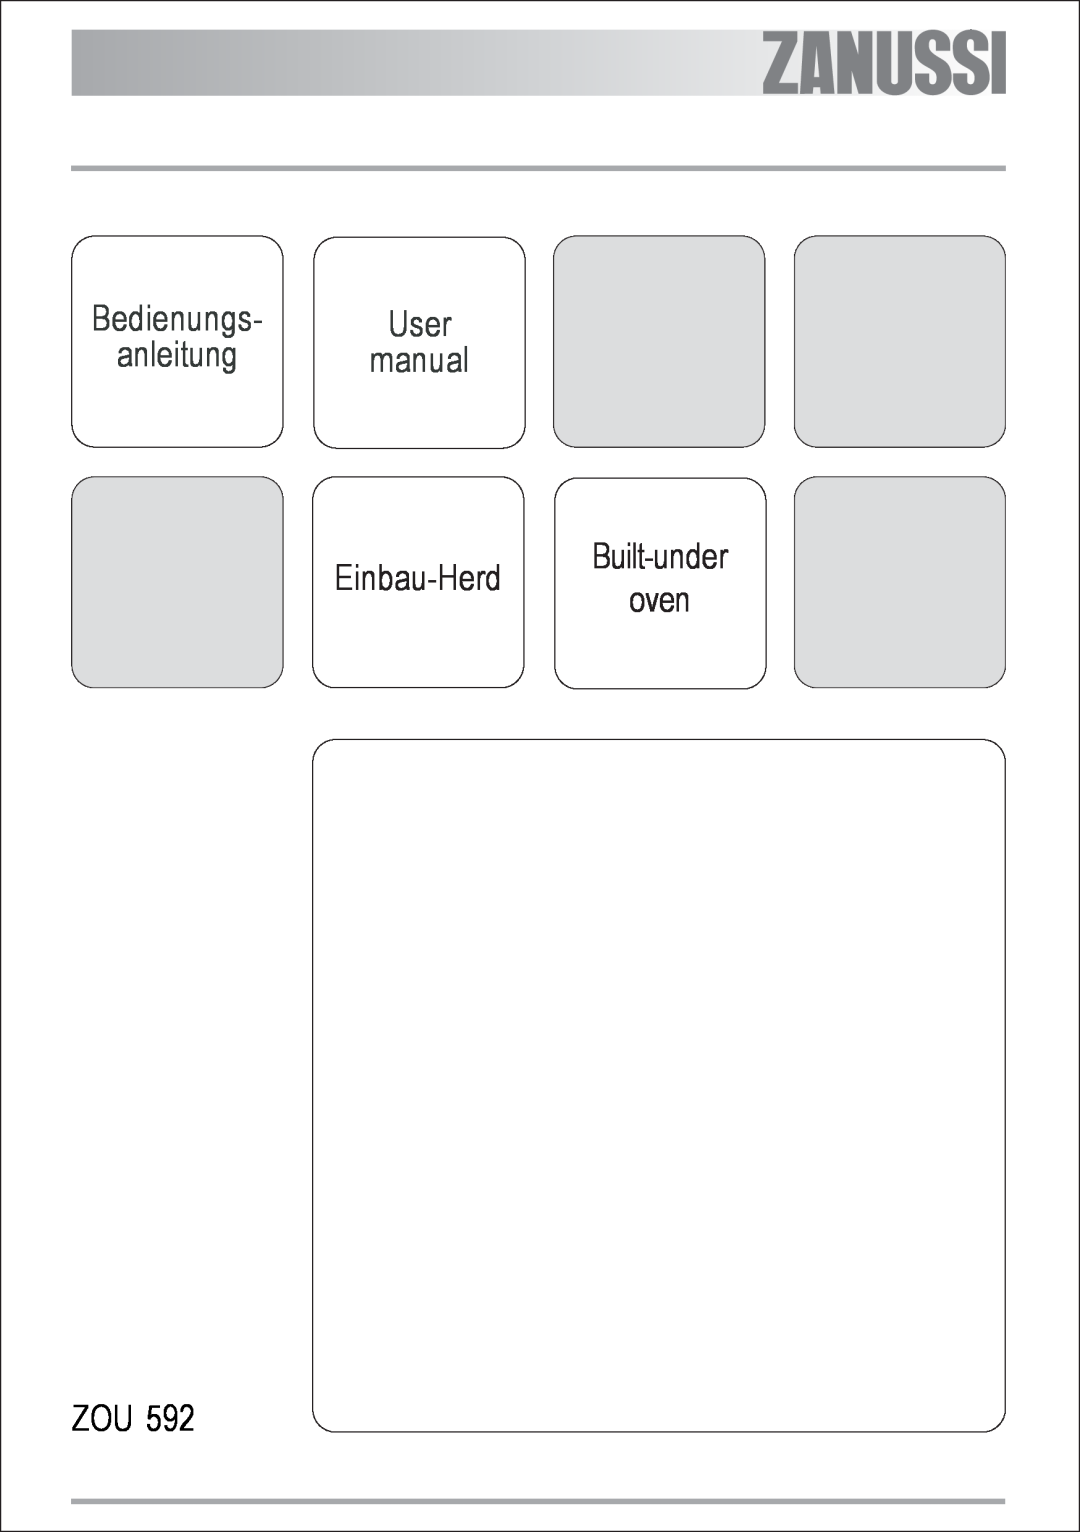 Zanussi ZOU 592 user manual Bedienungs, User, anleitung, Einbau-Herd, Built-under, oven 